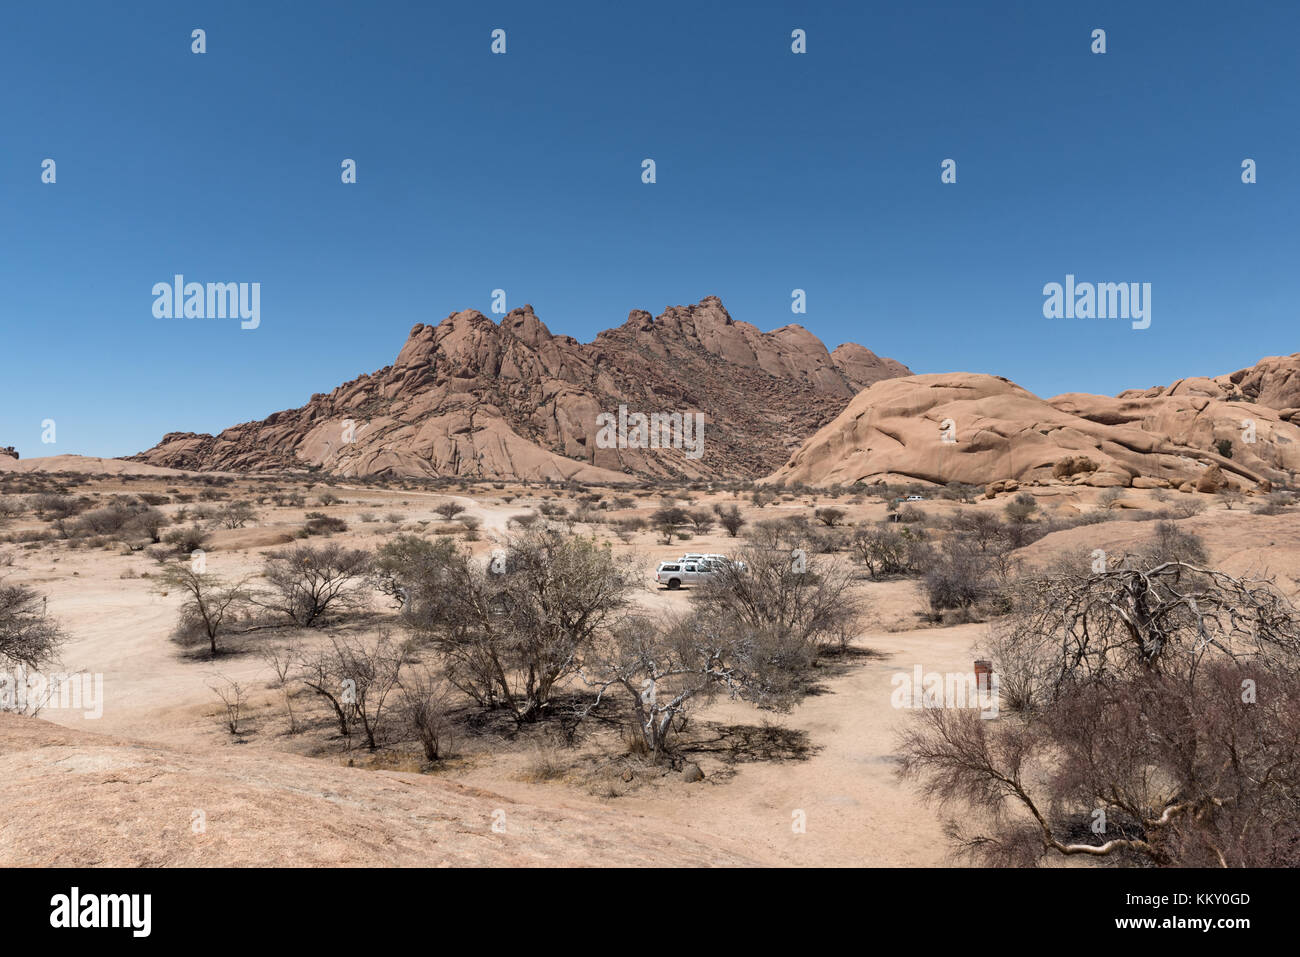 Spitzkoppe group of bald granite peaks in the Namib desert of Namibia Stock Photo